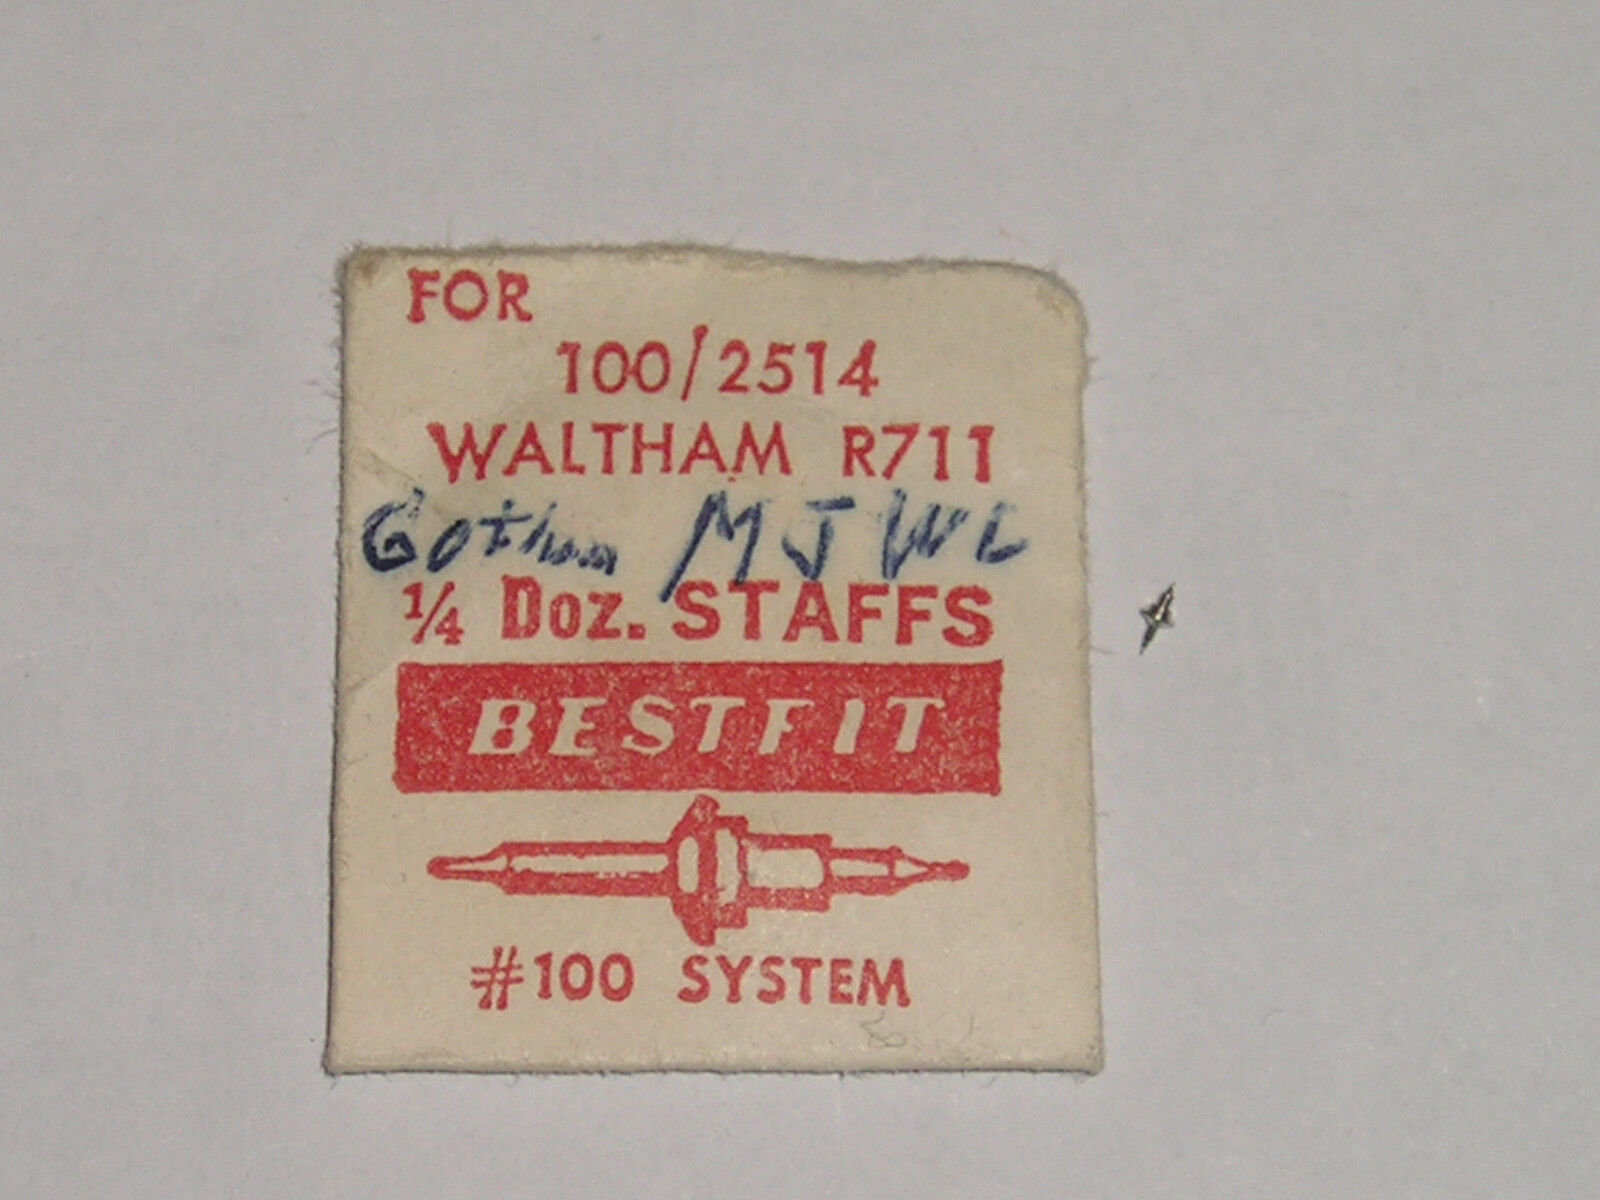 Waltham balance staff R711 R731 axe de balancier  Unruhwelle Bestfit 2514